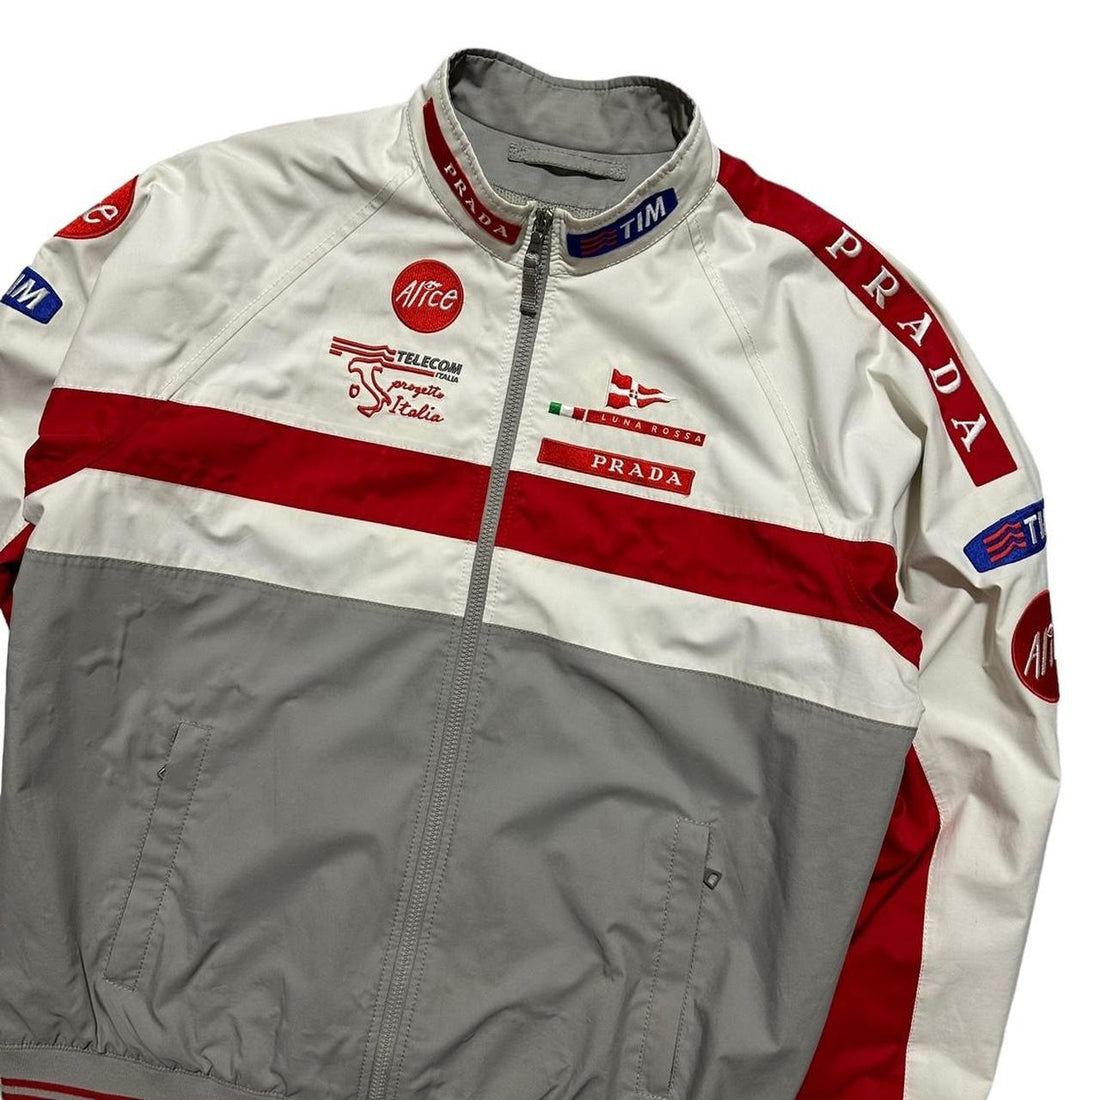 Prada Luna Rossa 2000's Sailing Team Racing Jacket